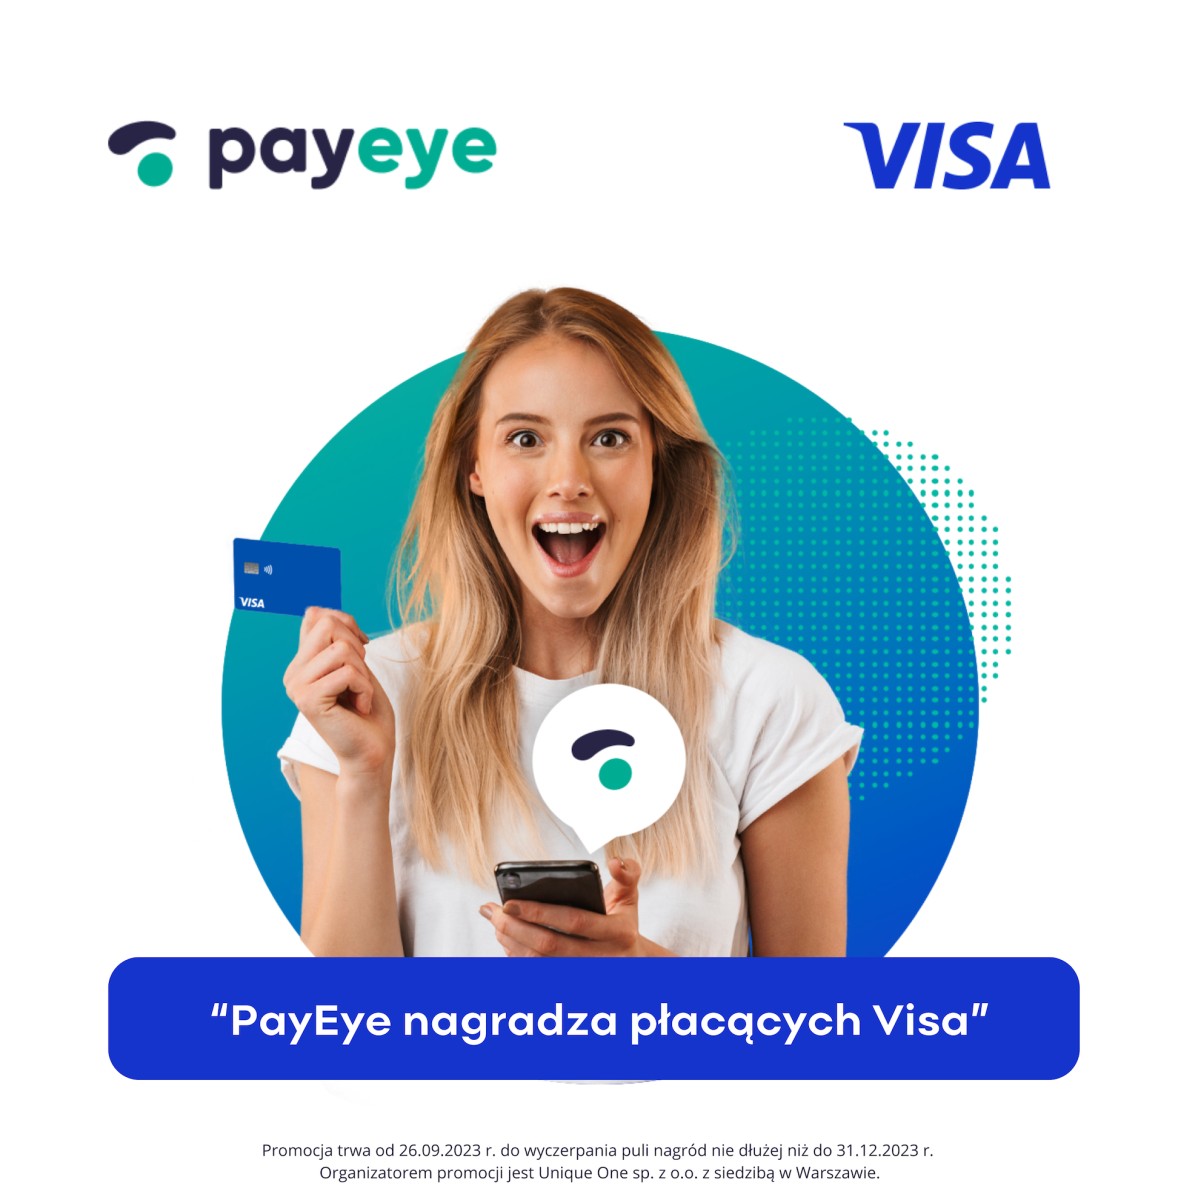 PayEye Visa promocja baner